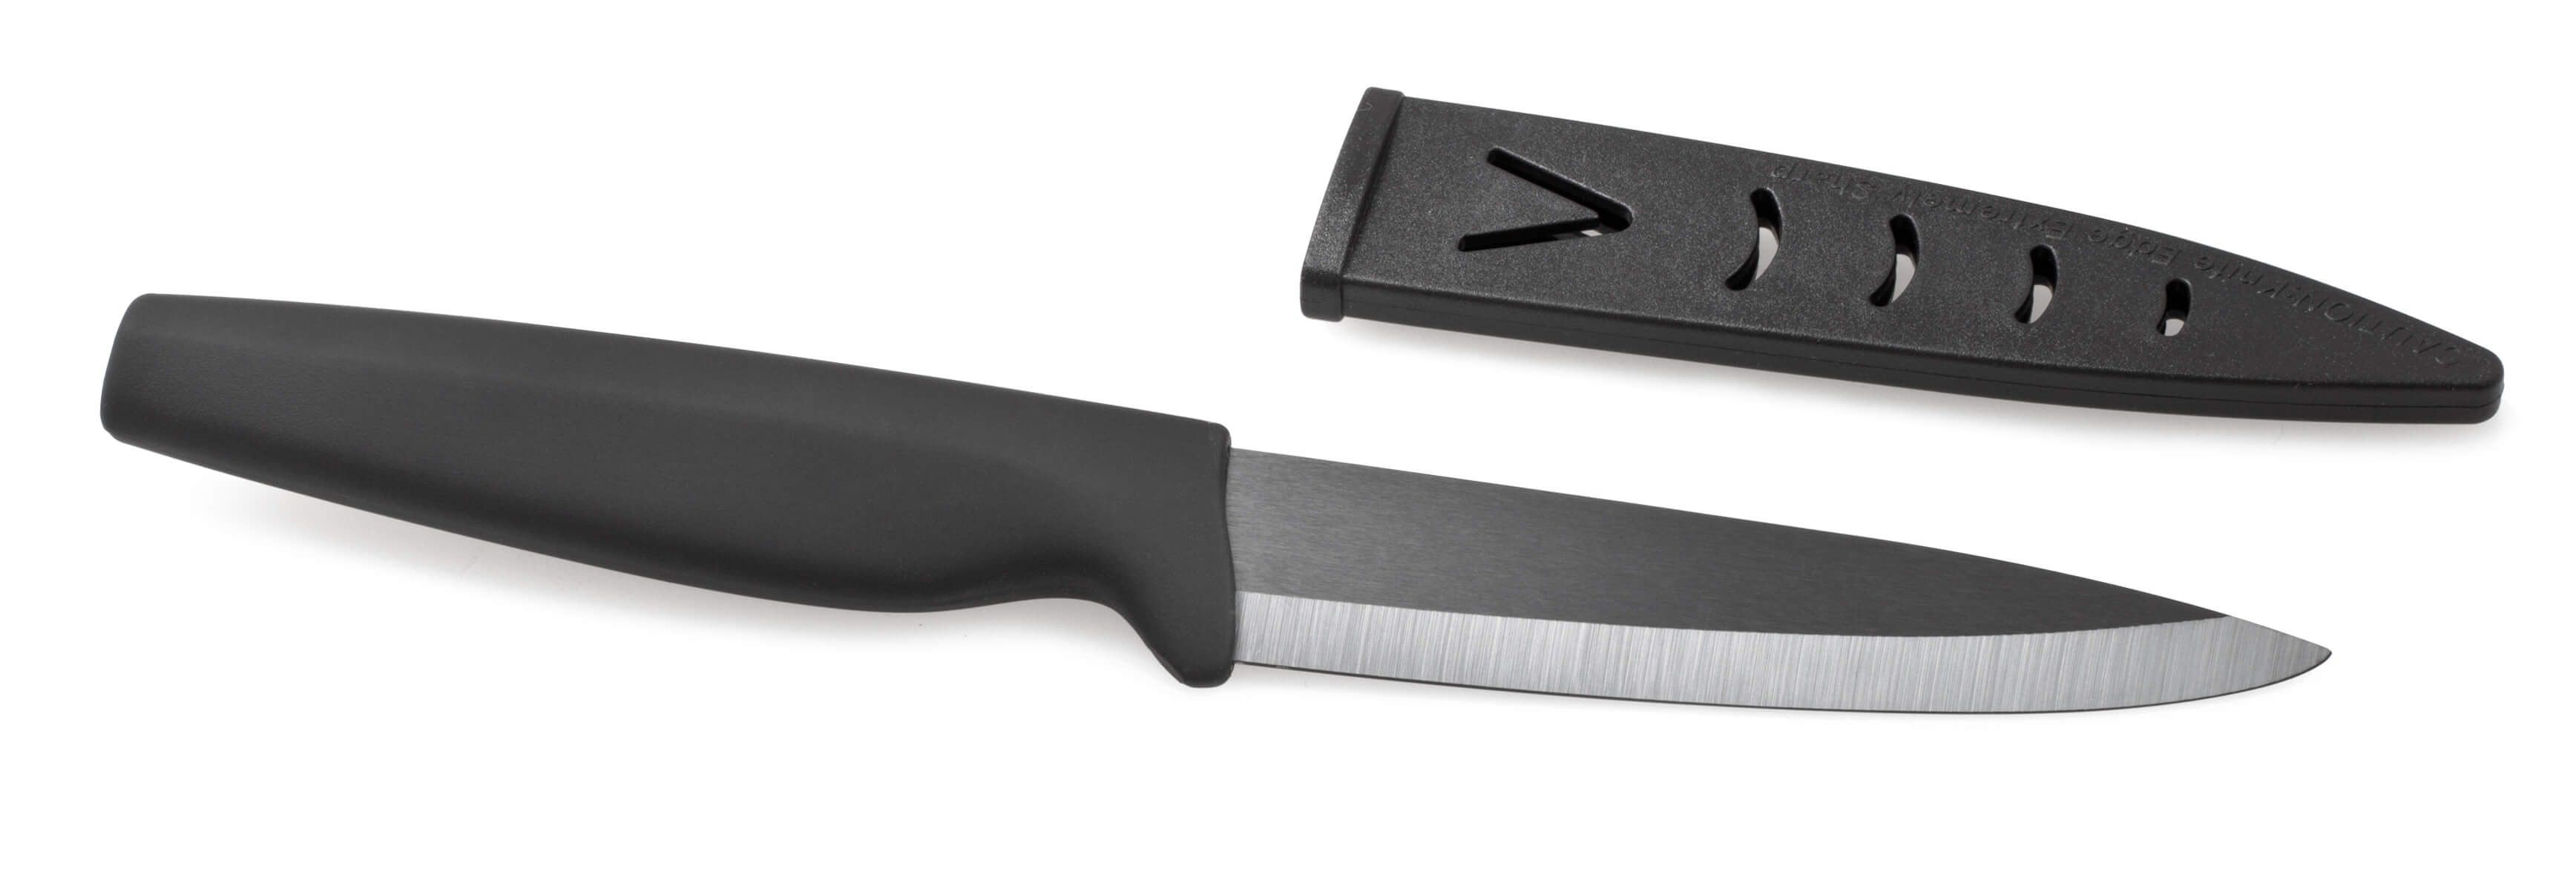 Ceramic knife small - 10,2cm